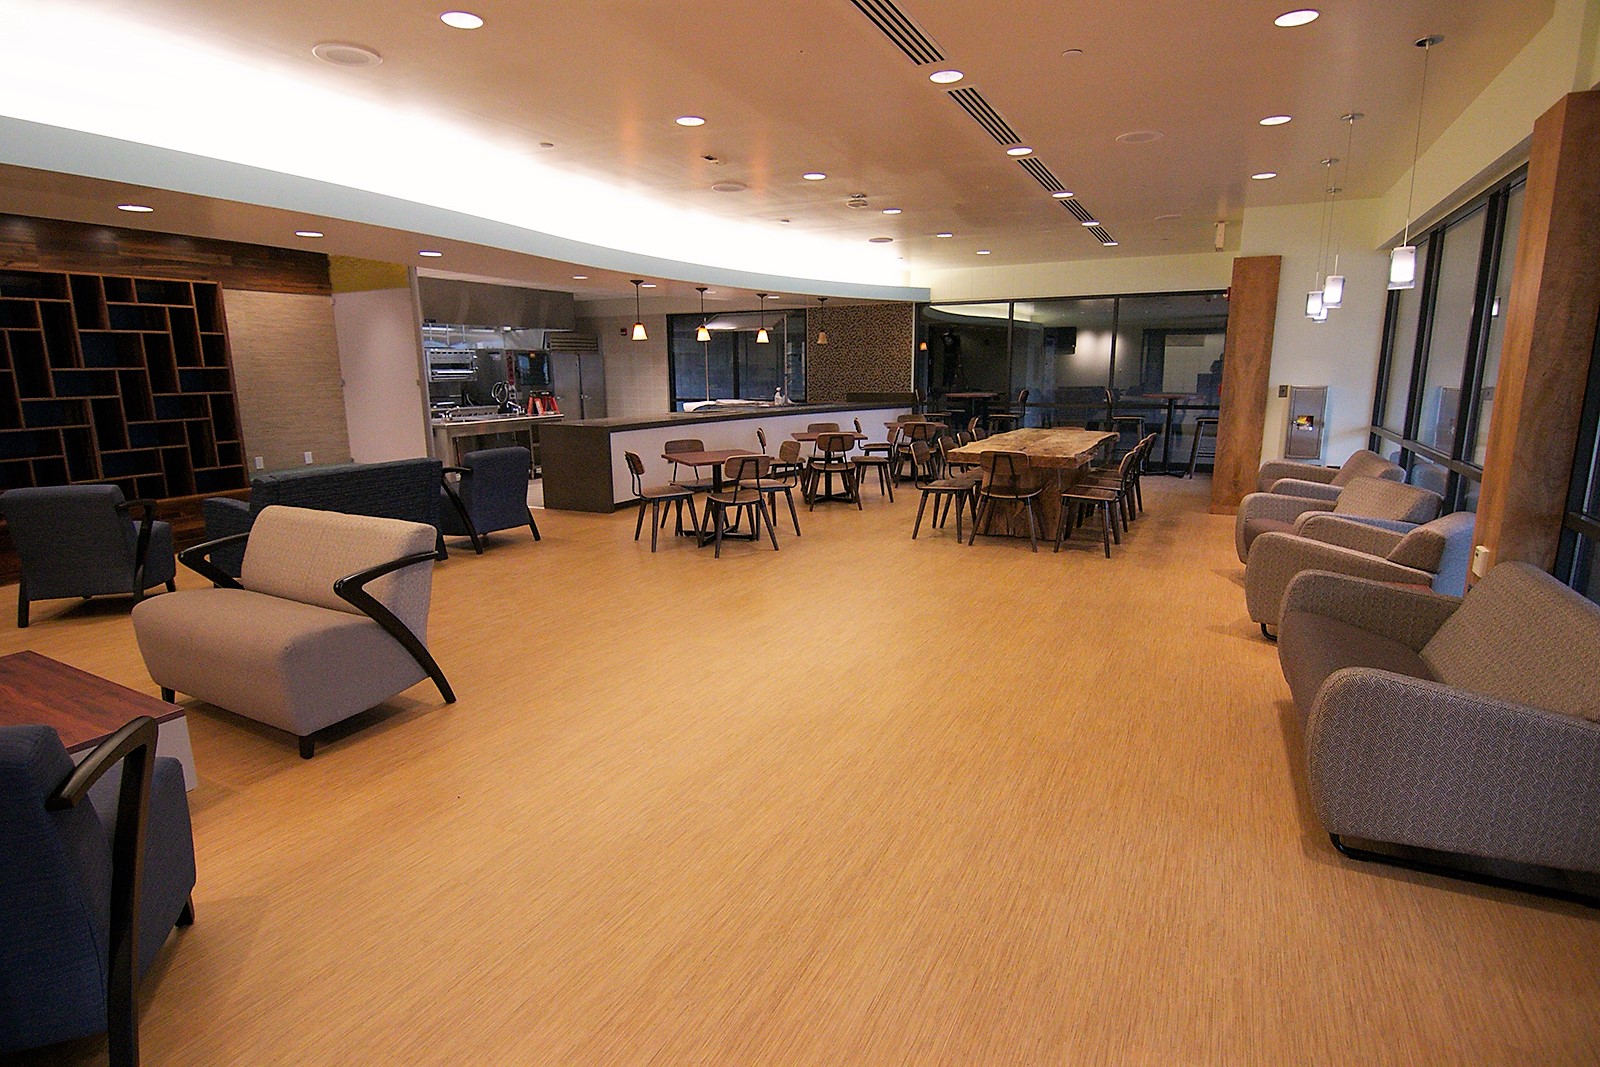 Photo caption: The Nāulu Center's lounge area is adjacent to a culinary art